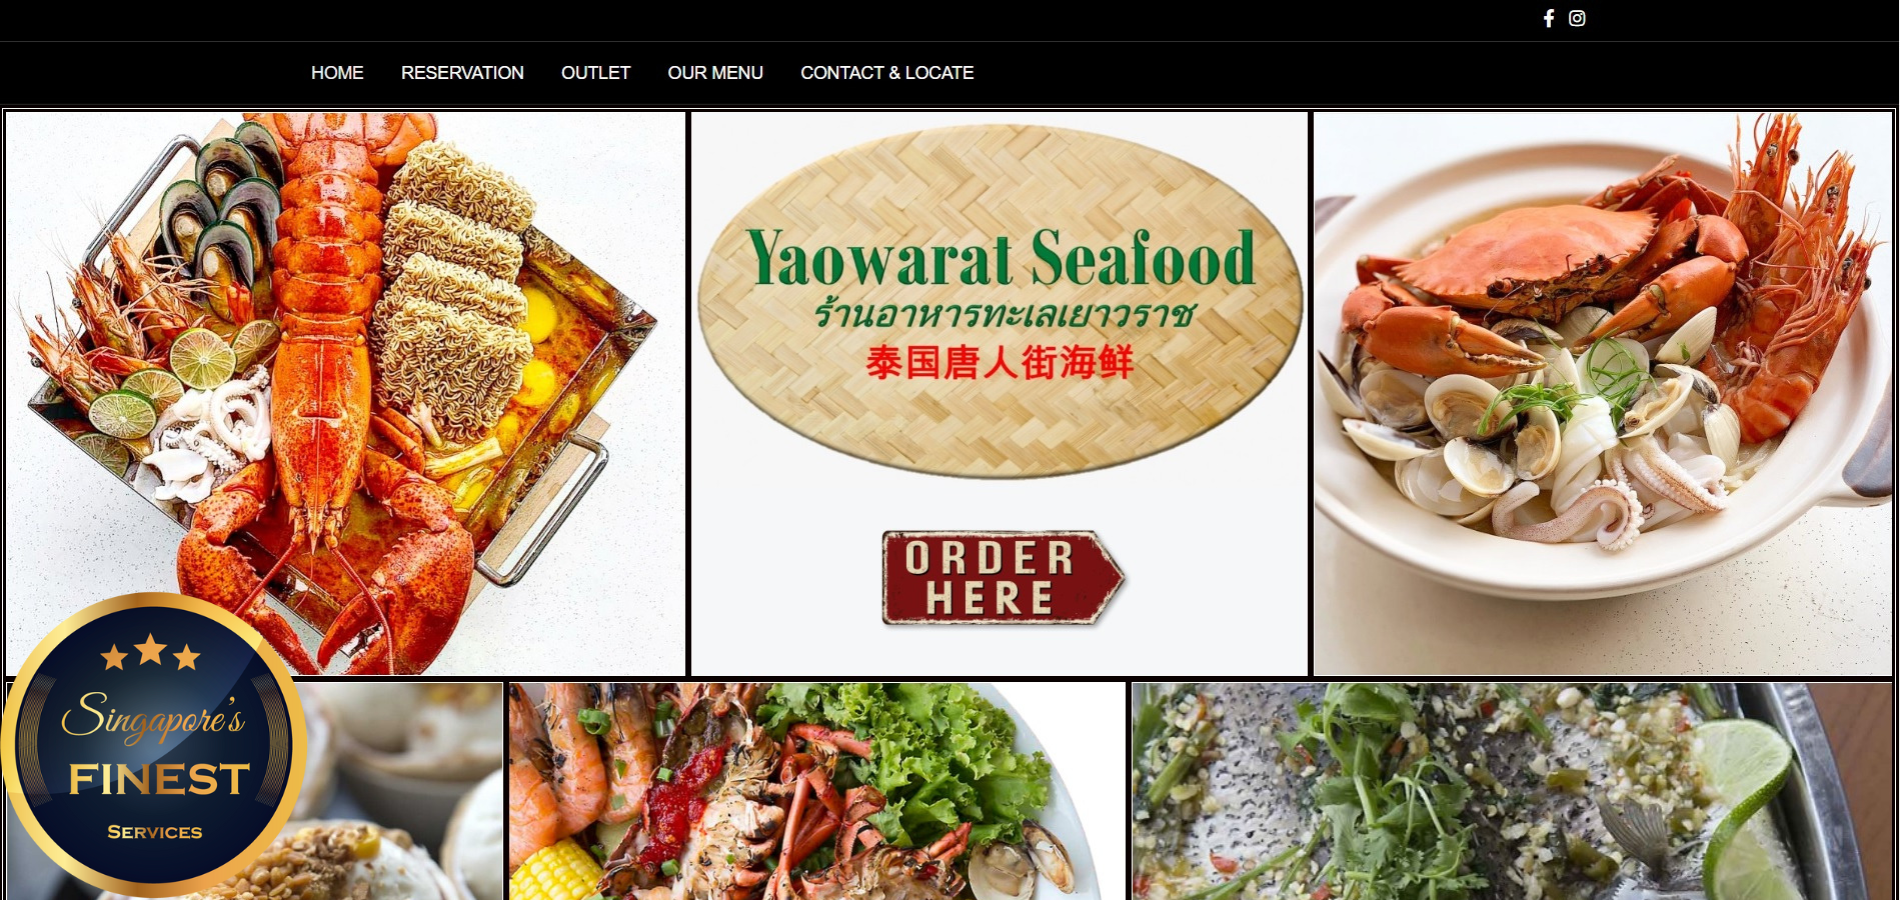 10 Best Seafood Restaurants in Singapore